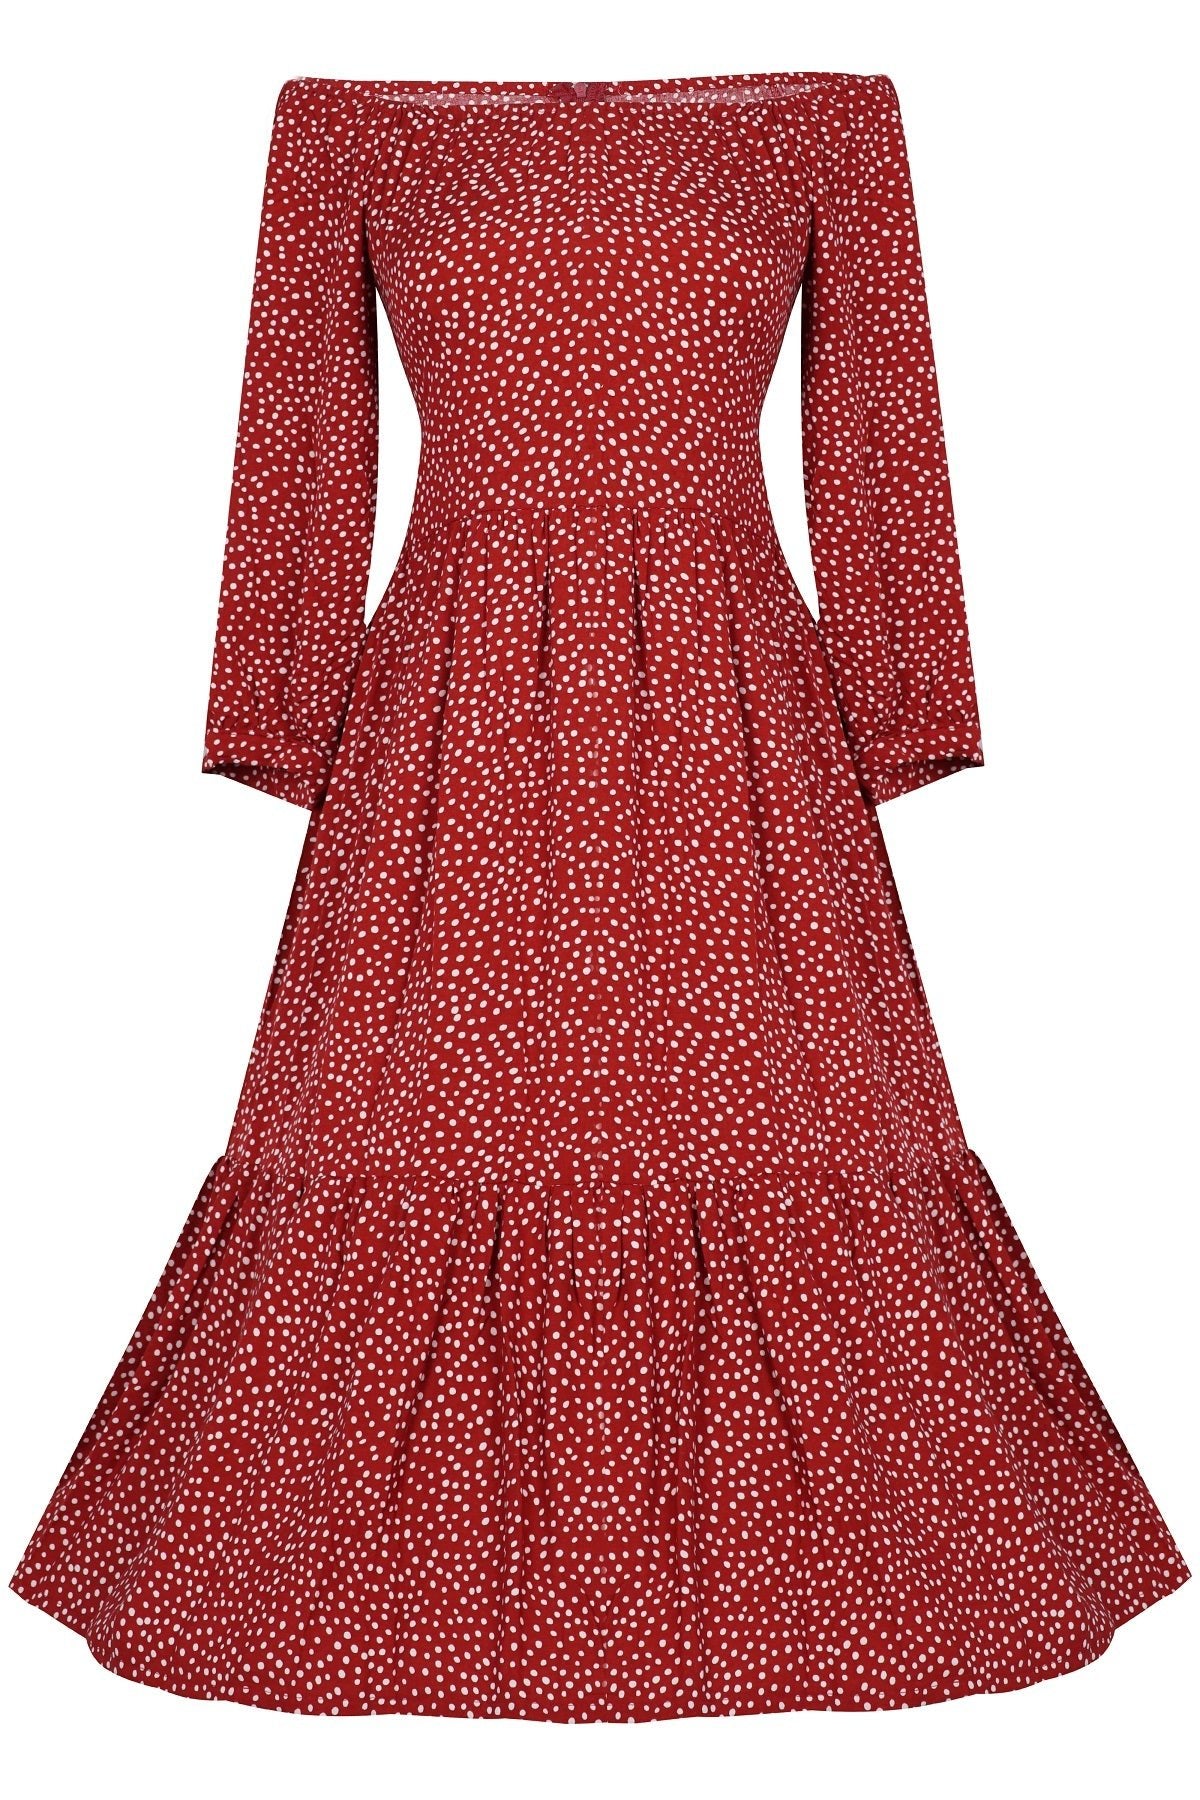 Sonia Floaty Day Dress in Burgundy Polka Dots